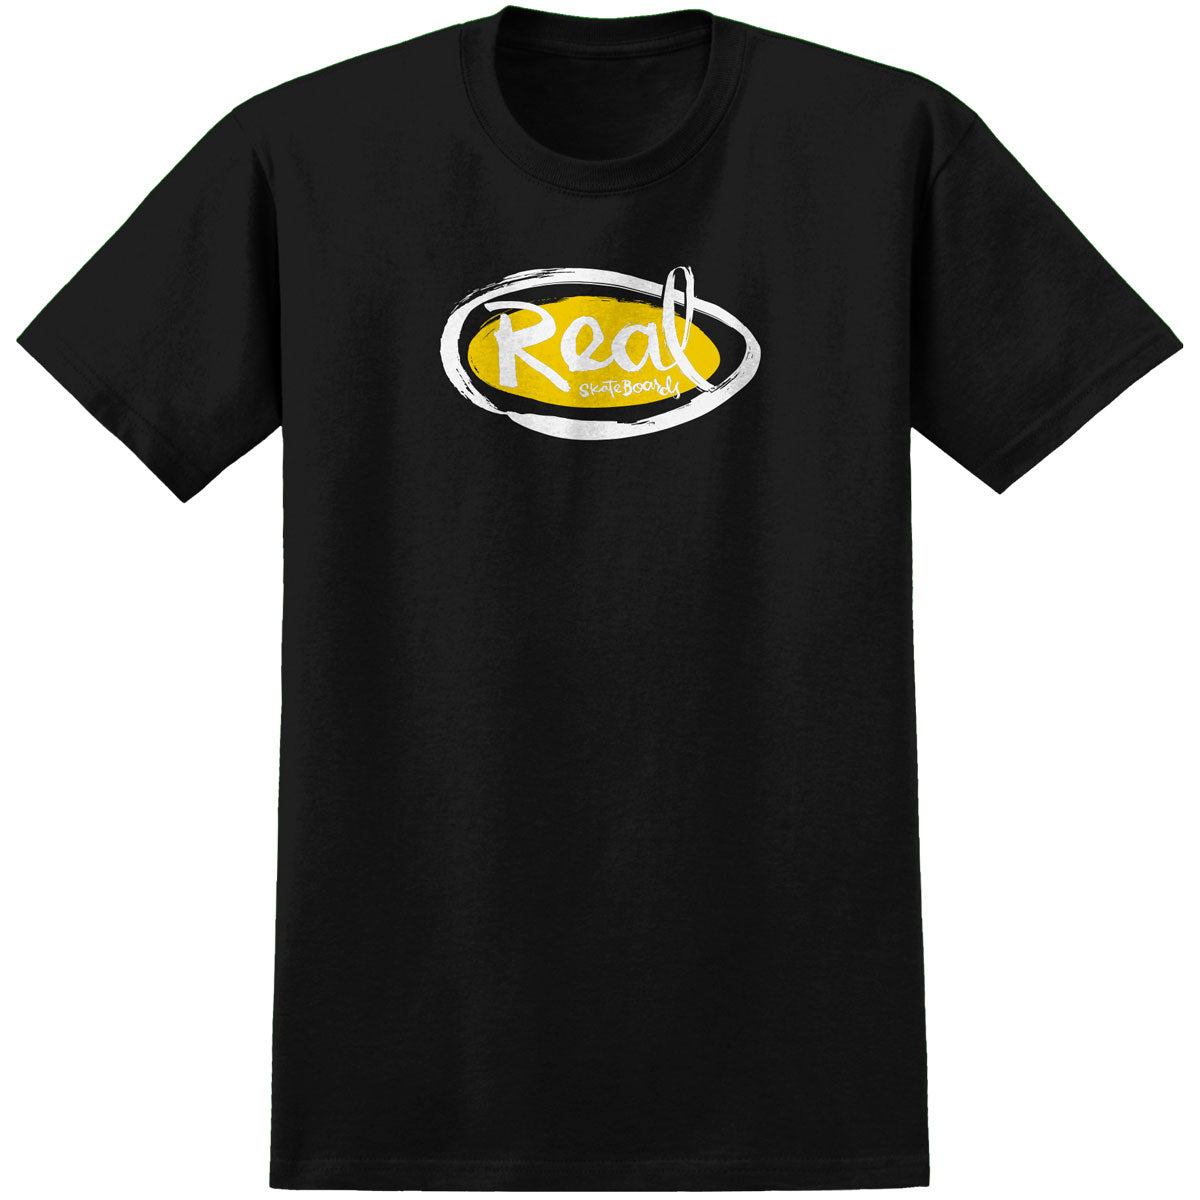 Real Natas Oval T-Shirt - Black/Yellow/White image 1